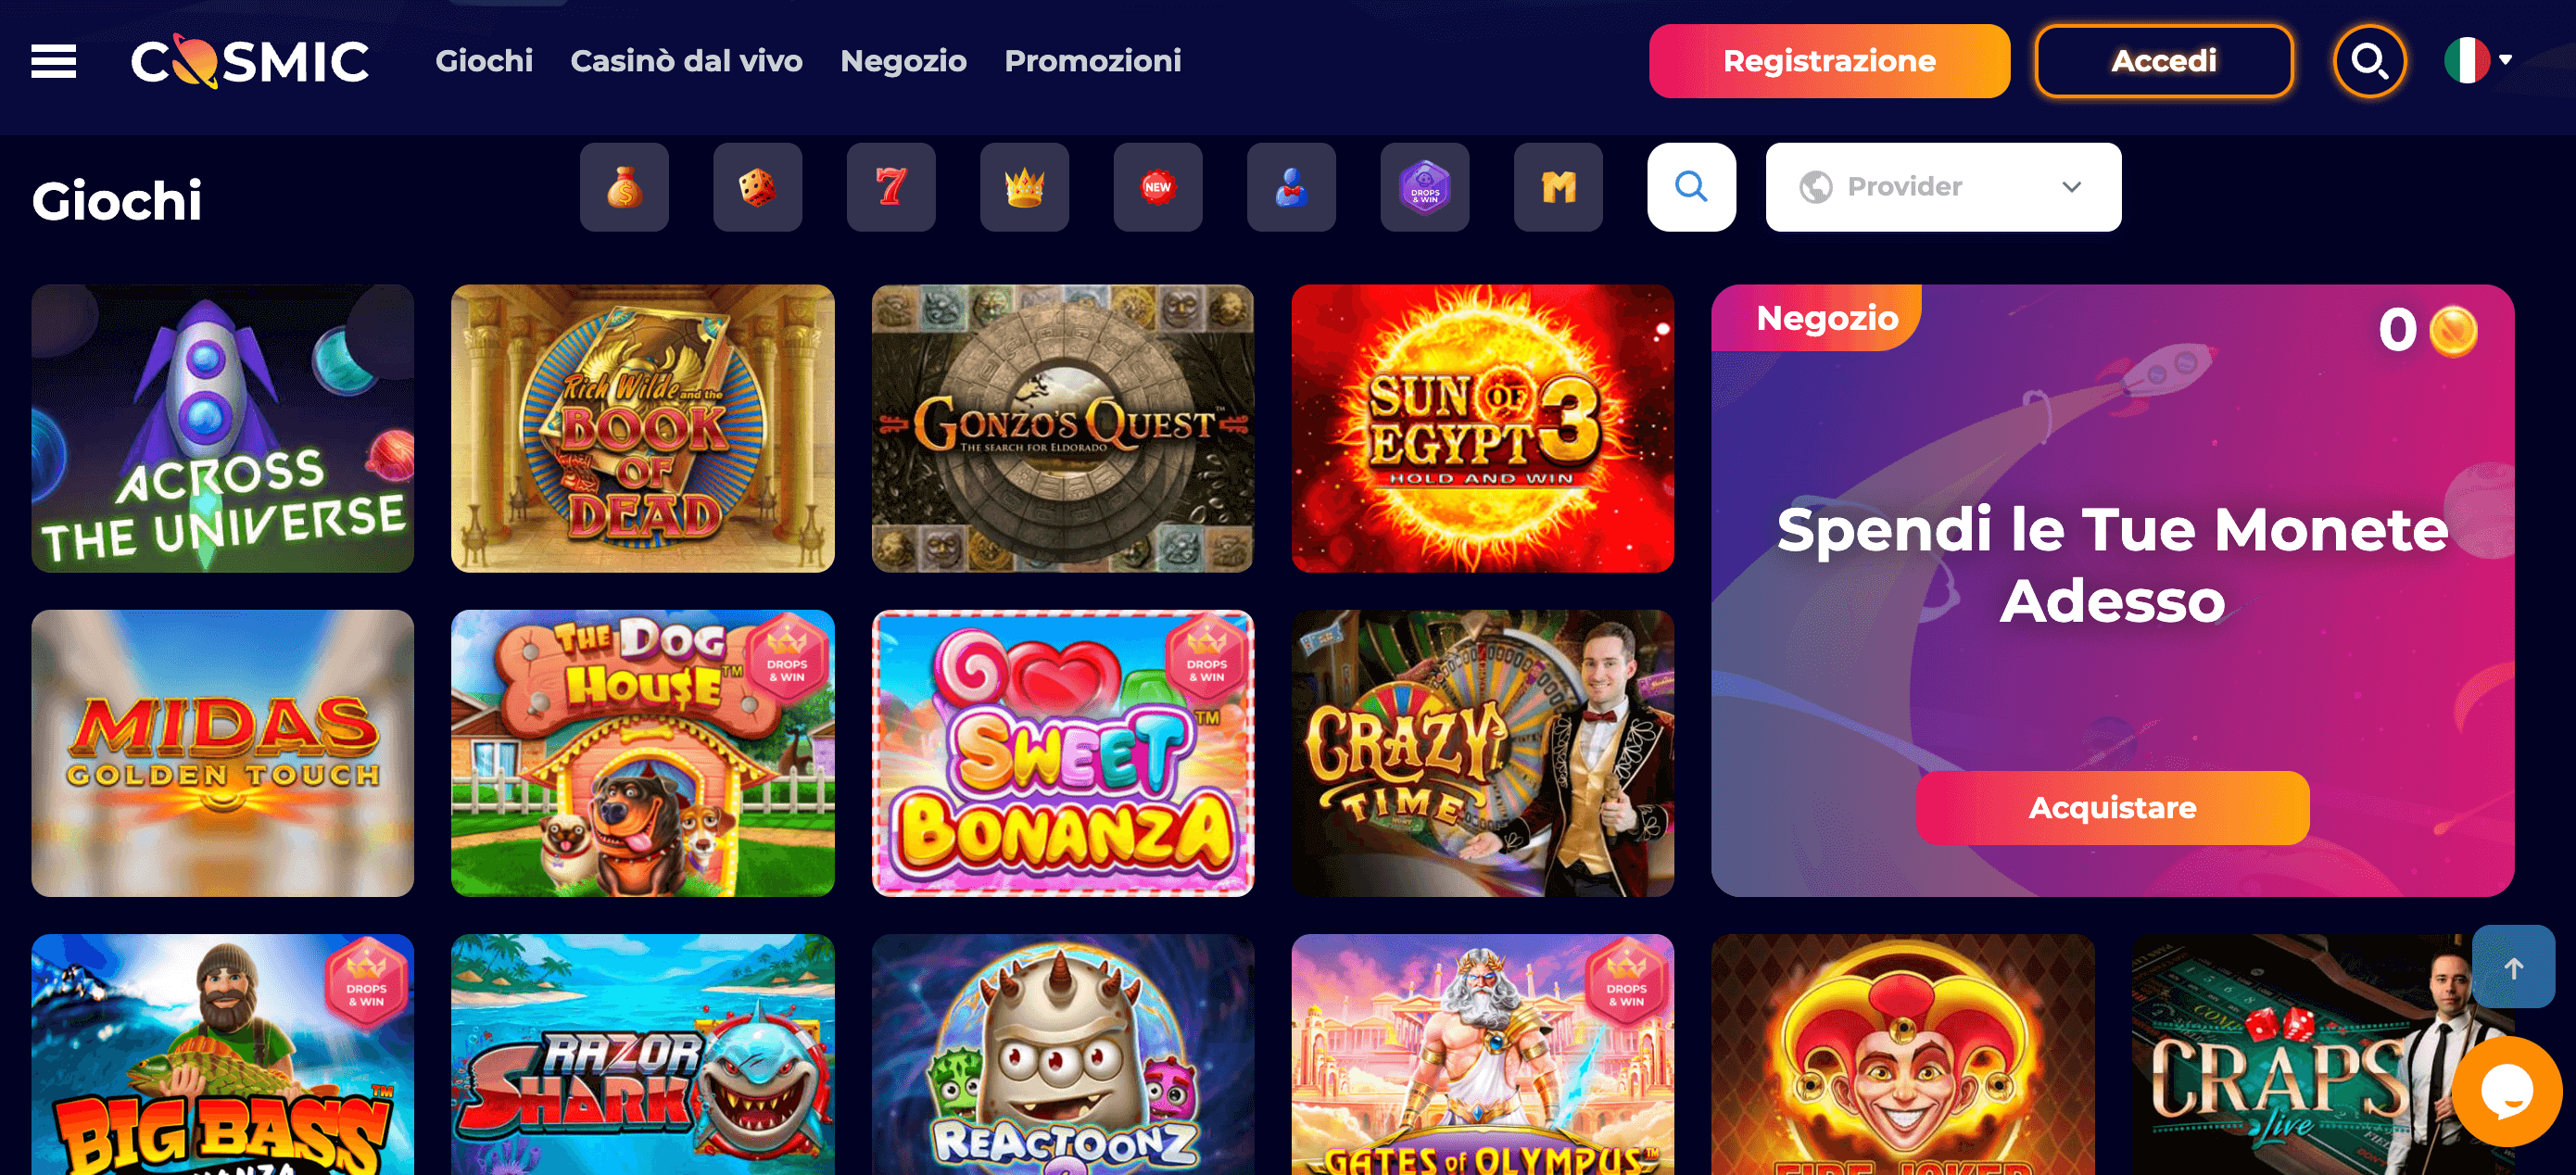 Cosmicslot Casino Slot